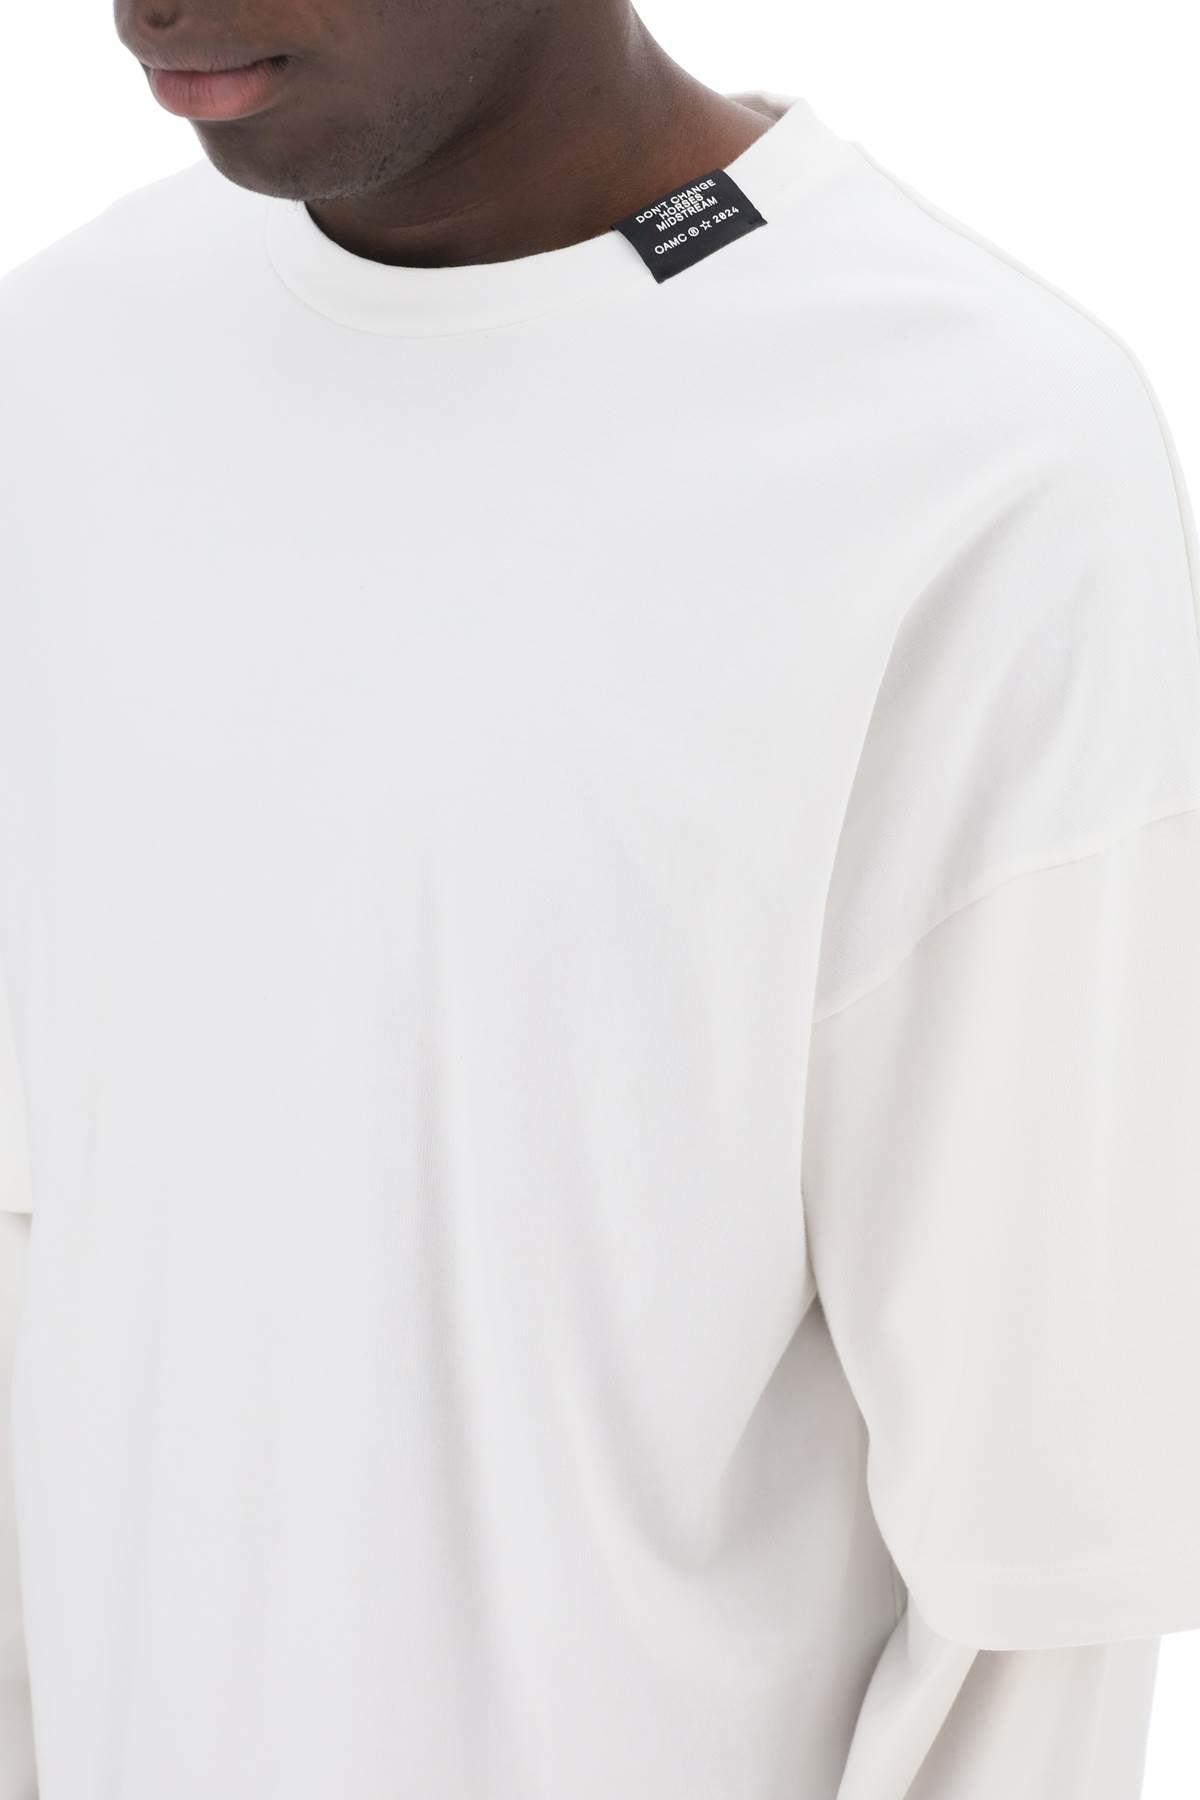 Oamc Long Sleeved Layered T Shirt - JOHN JULIA